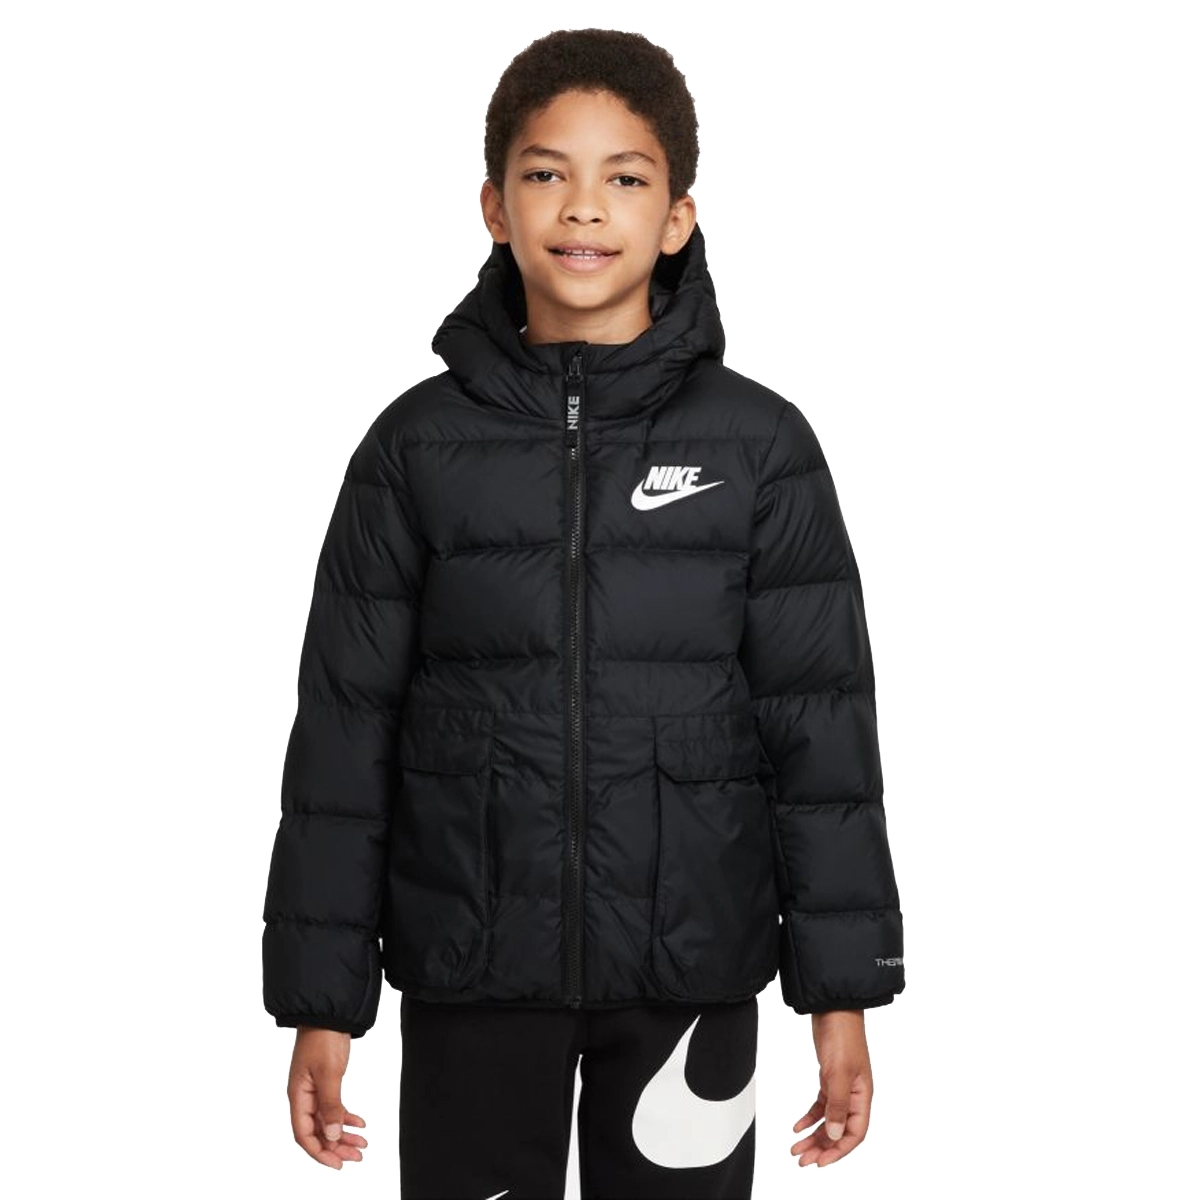 handelaar spiegel Ontleden Nike Sportswear Therma Fit Winterjas Junior van winterjassen